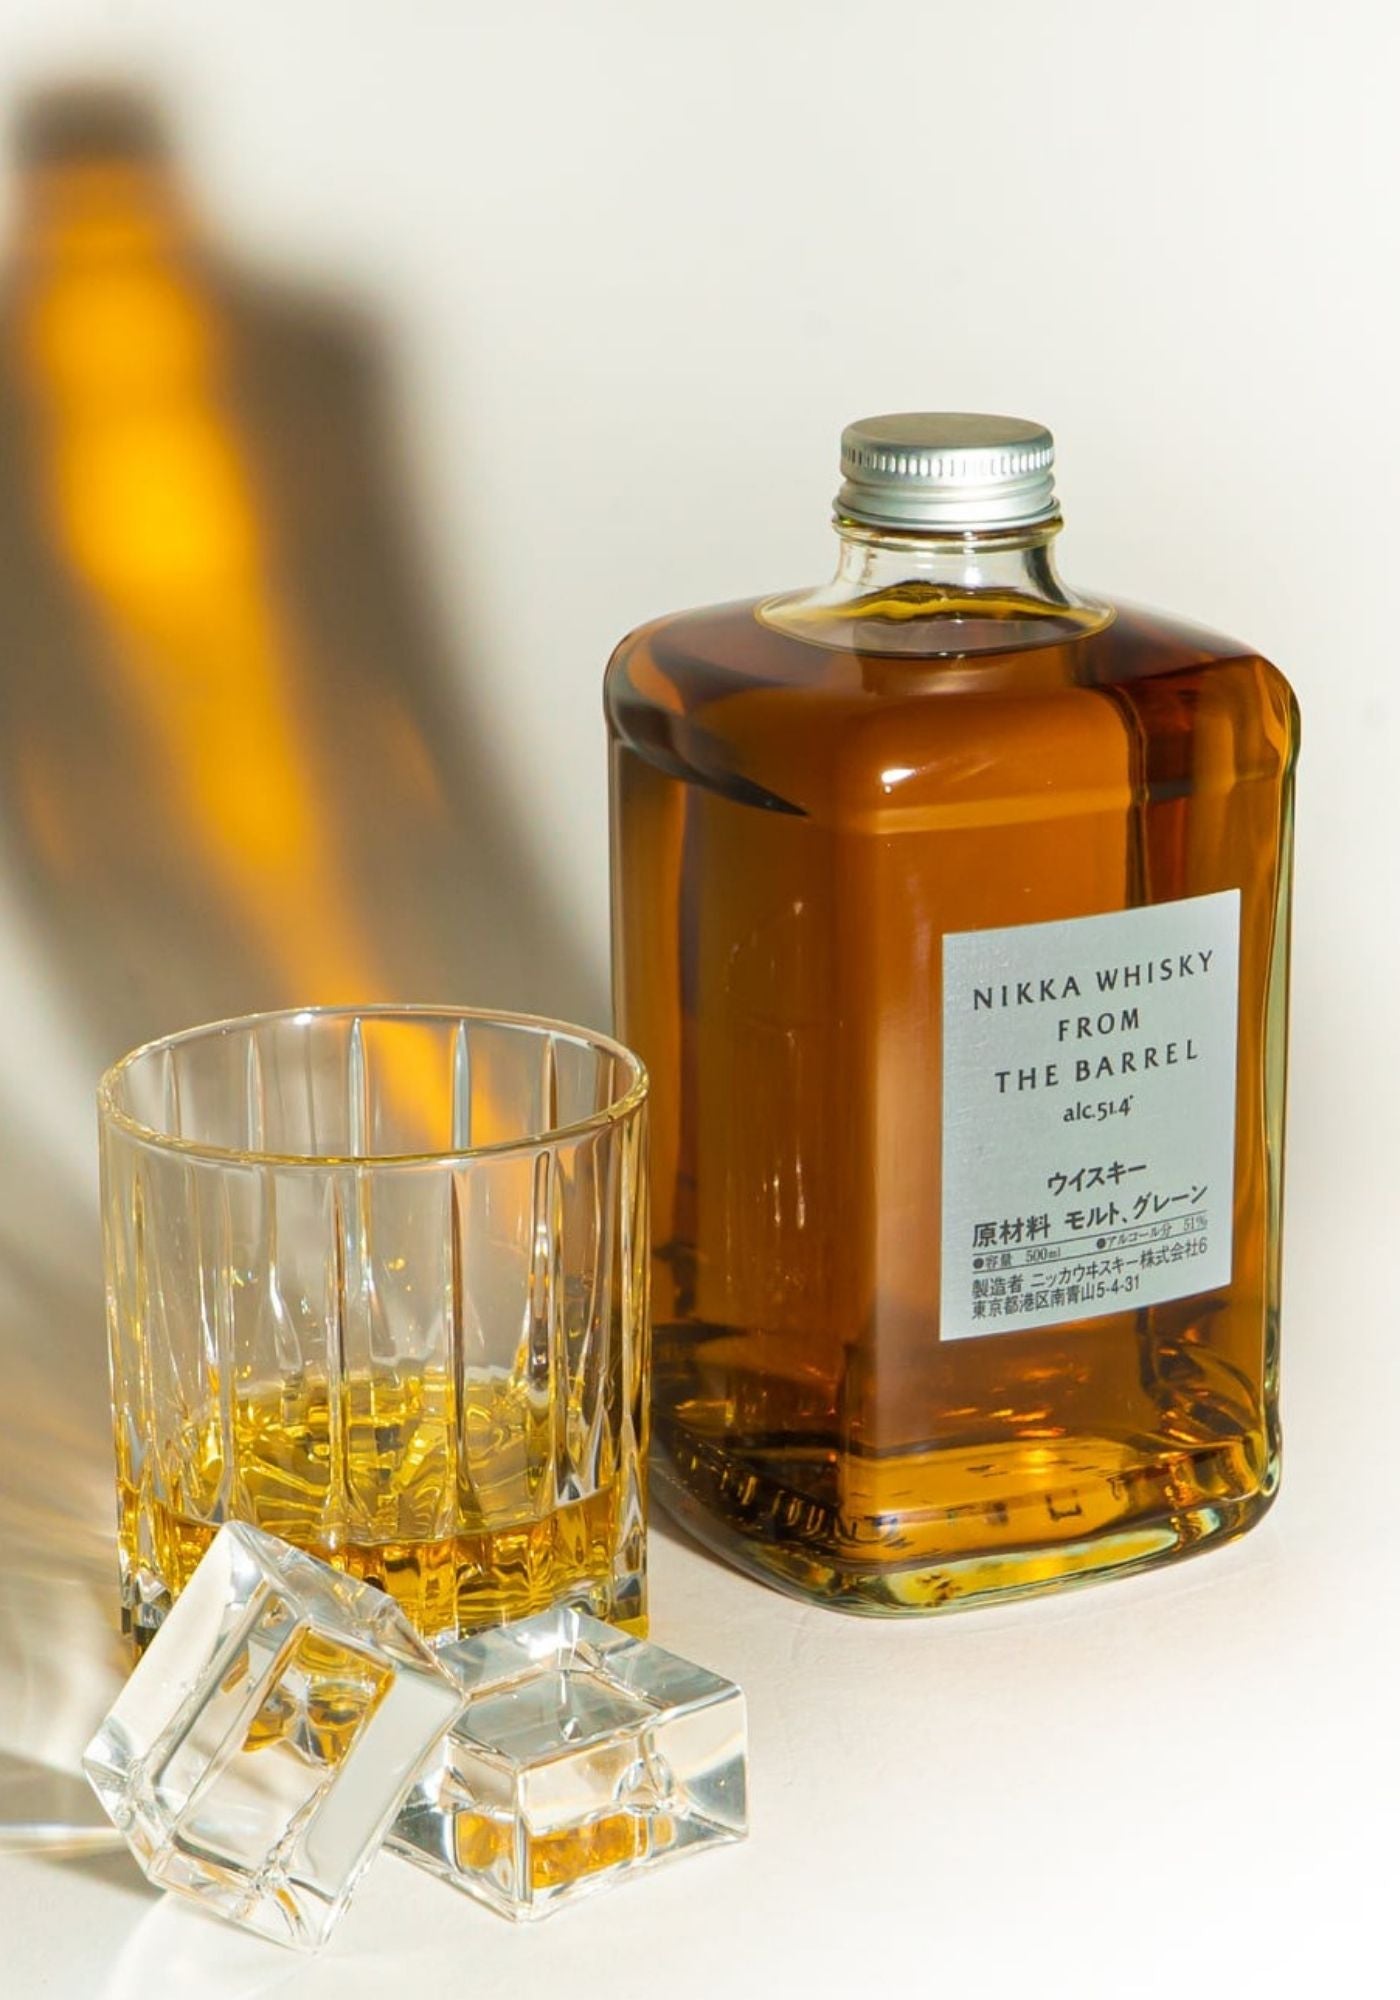 whisky-nikka-from-the-barrel-nikka-verre-alcool